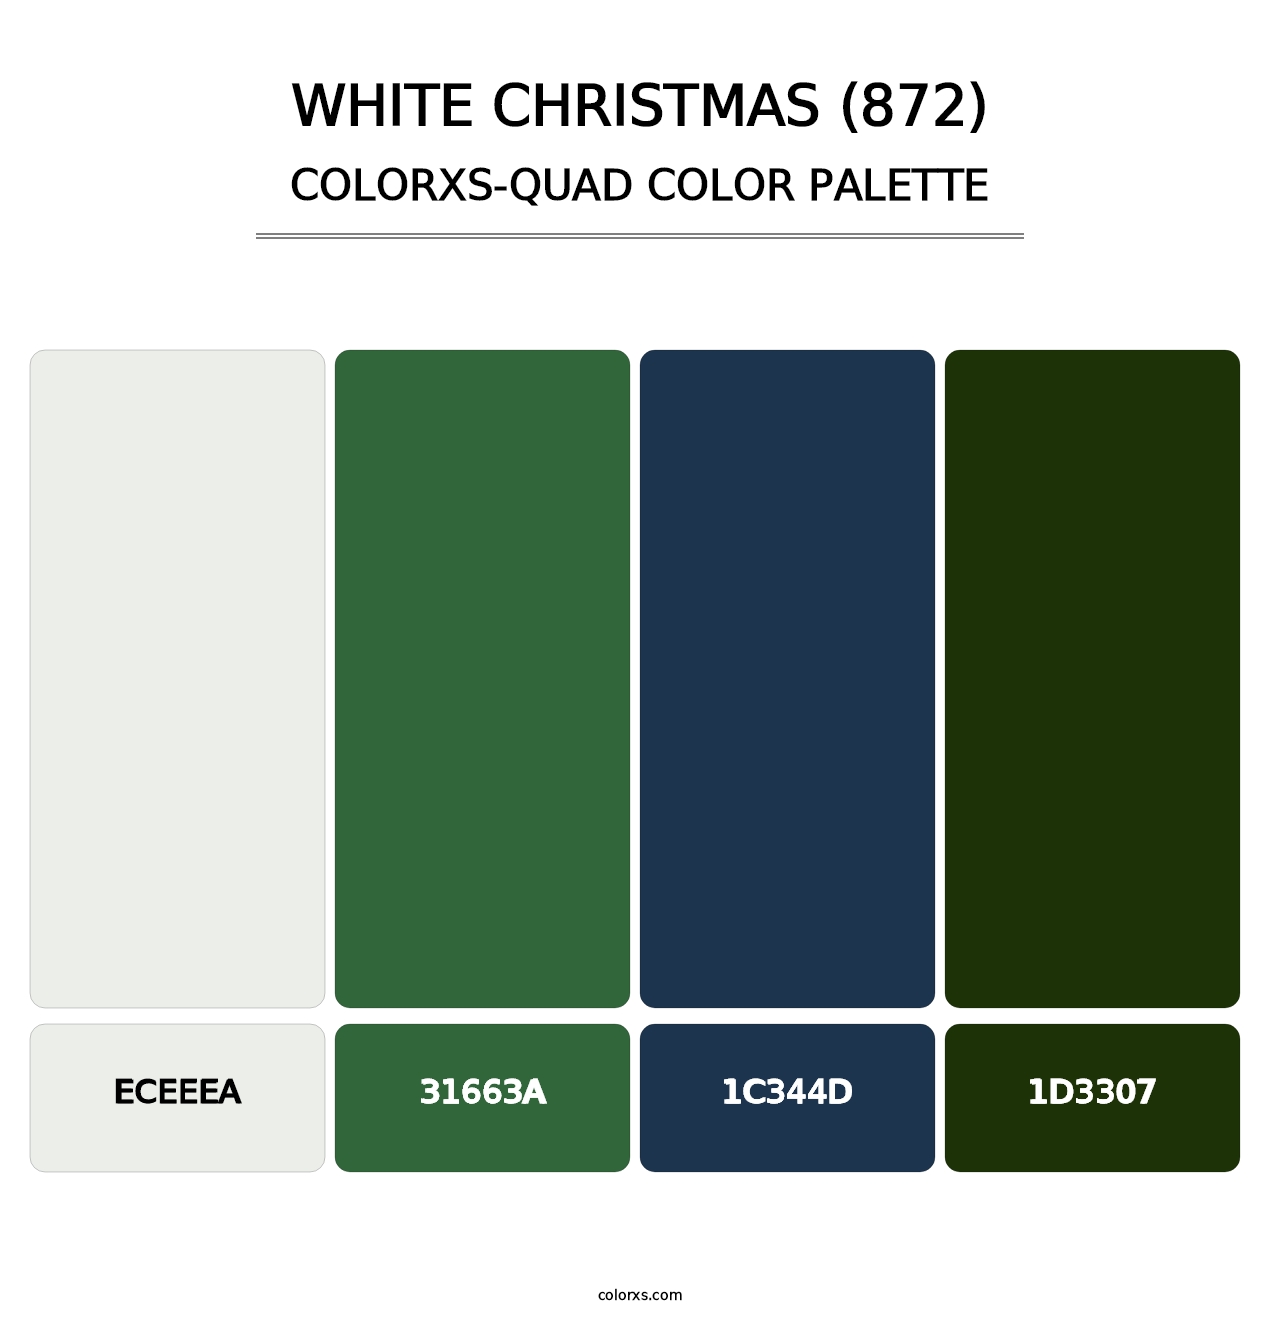 White Christmas (872) - Colorxs Quad Palette